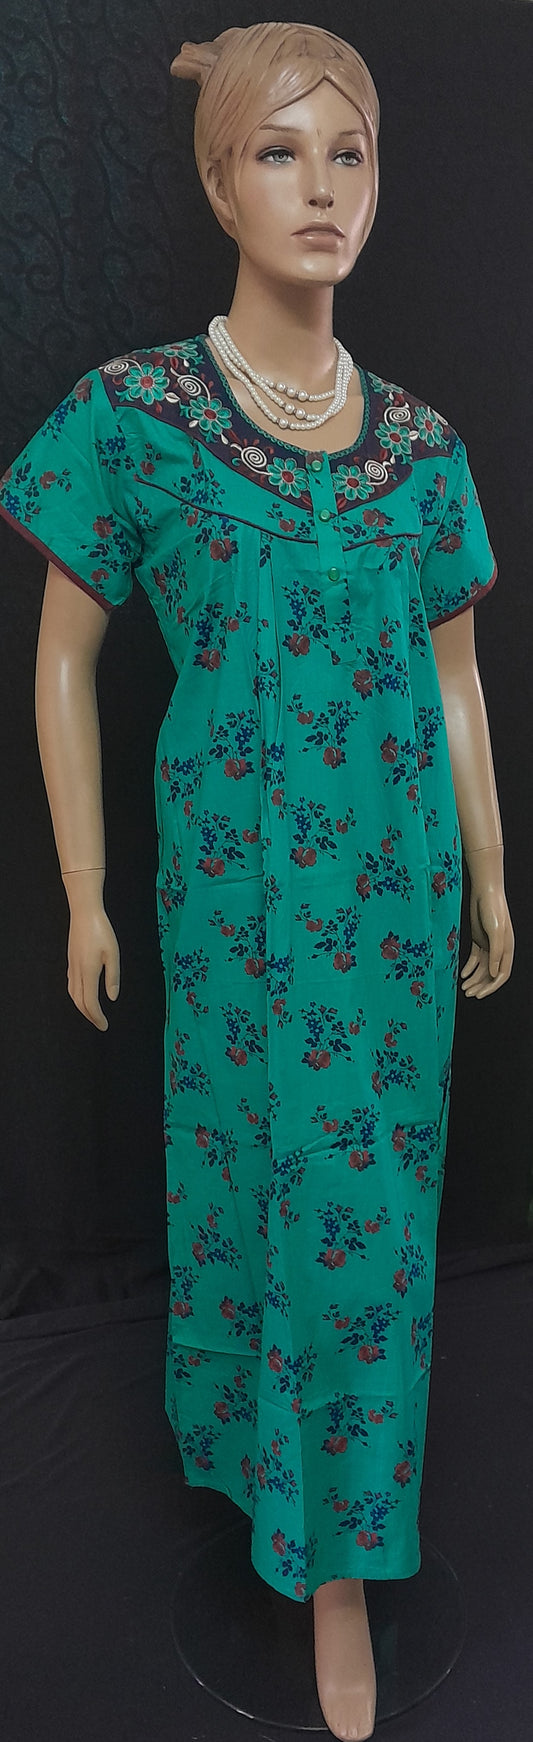 Women's Rama Green Floral Print Short Sleeves Nighty - Size(44)